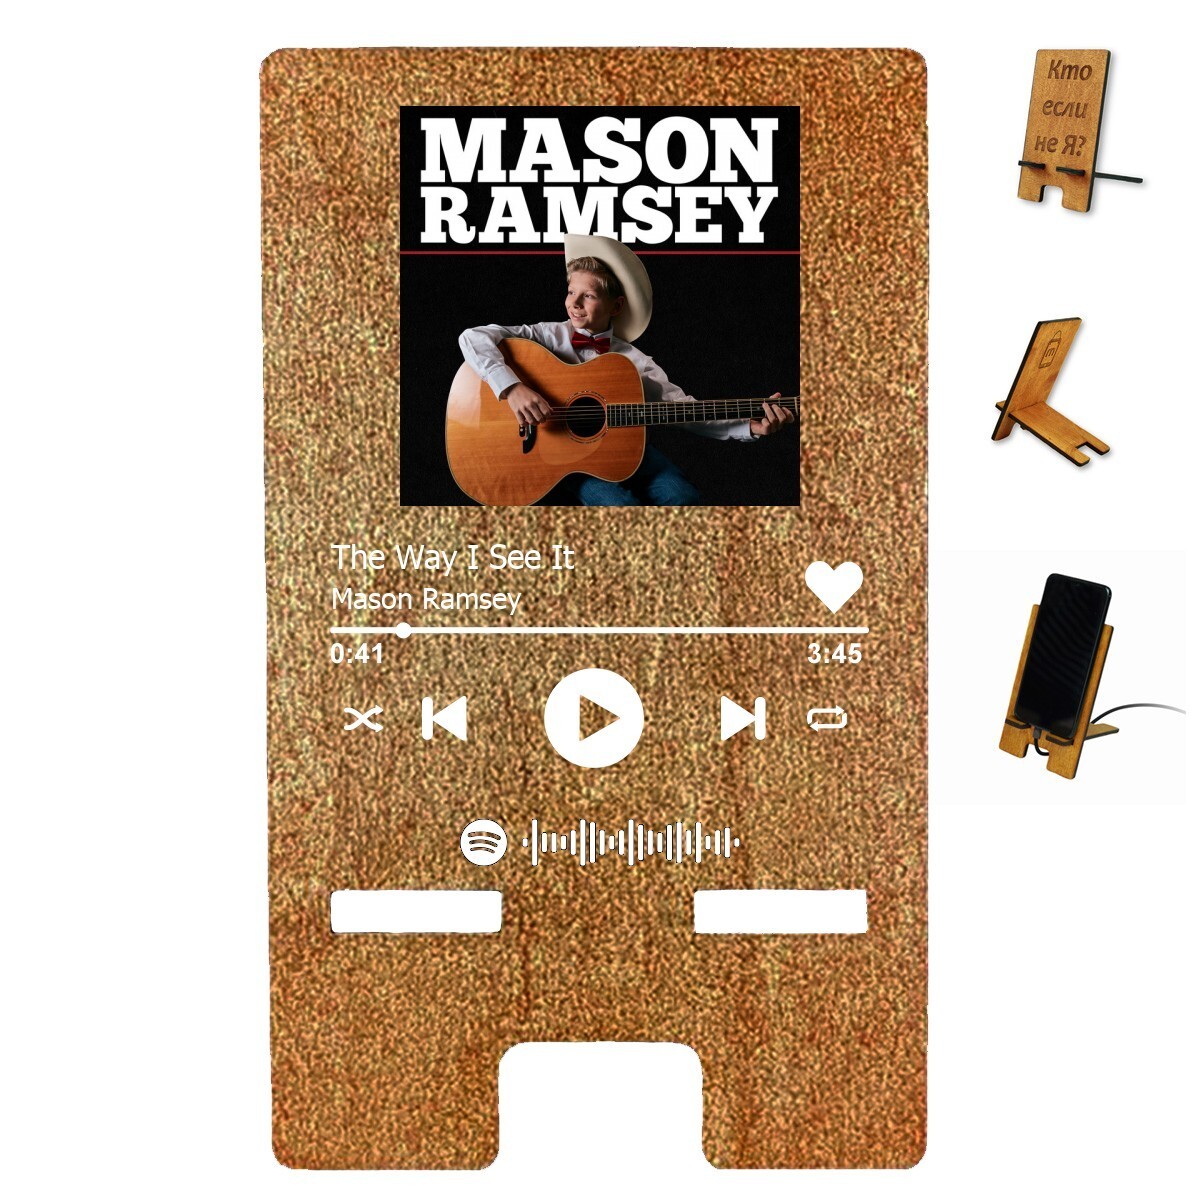 Famous mason ramsey lyrics